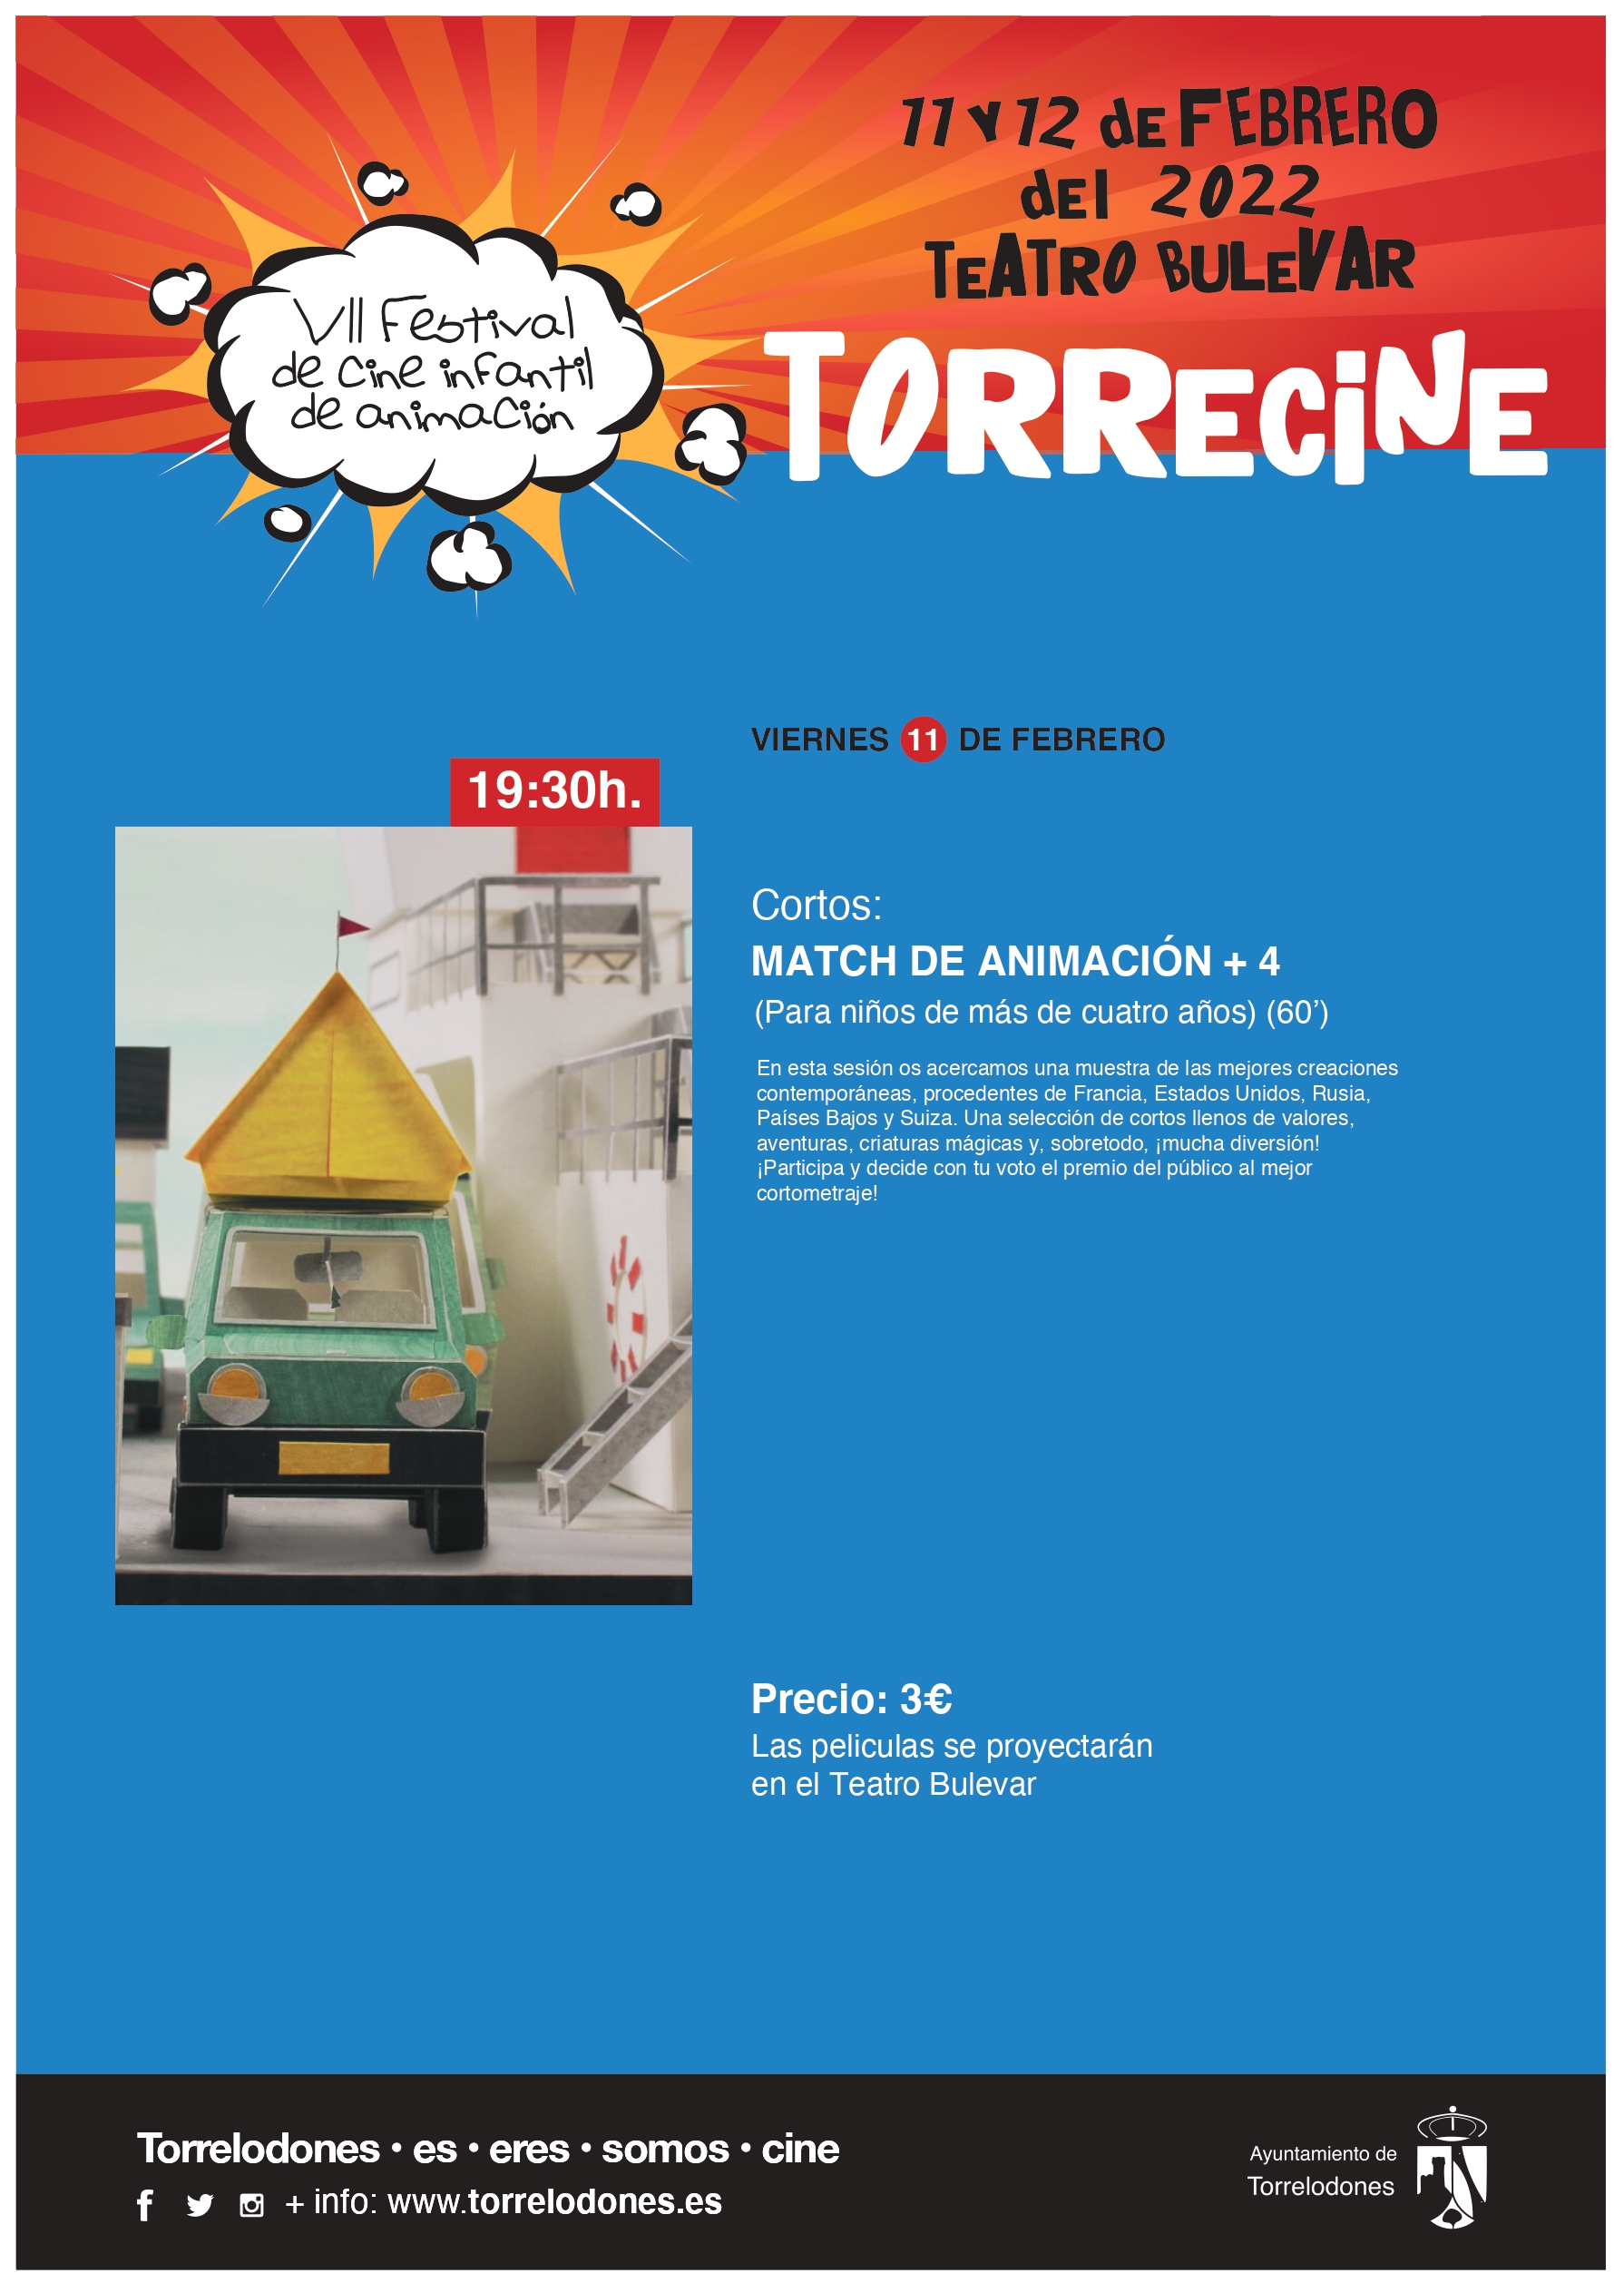 torrecine 18 01 22 3 page 0001